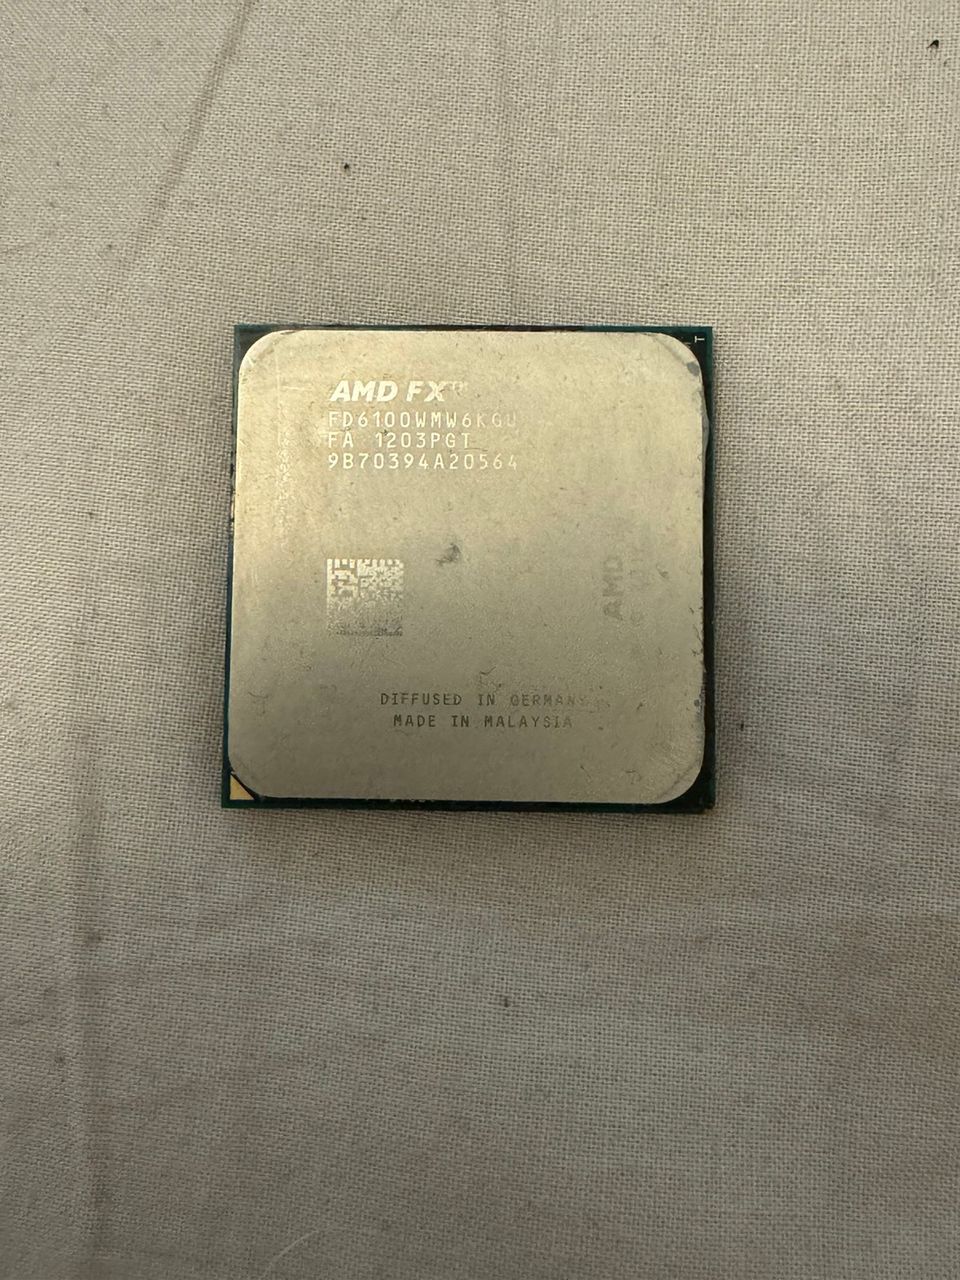 AMD FX 6100